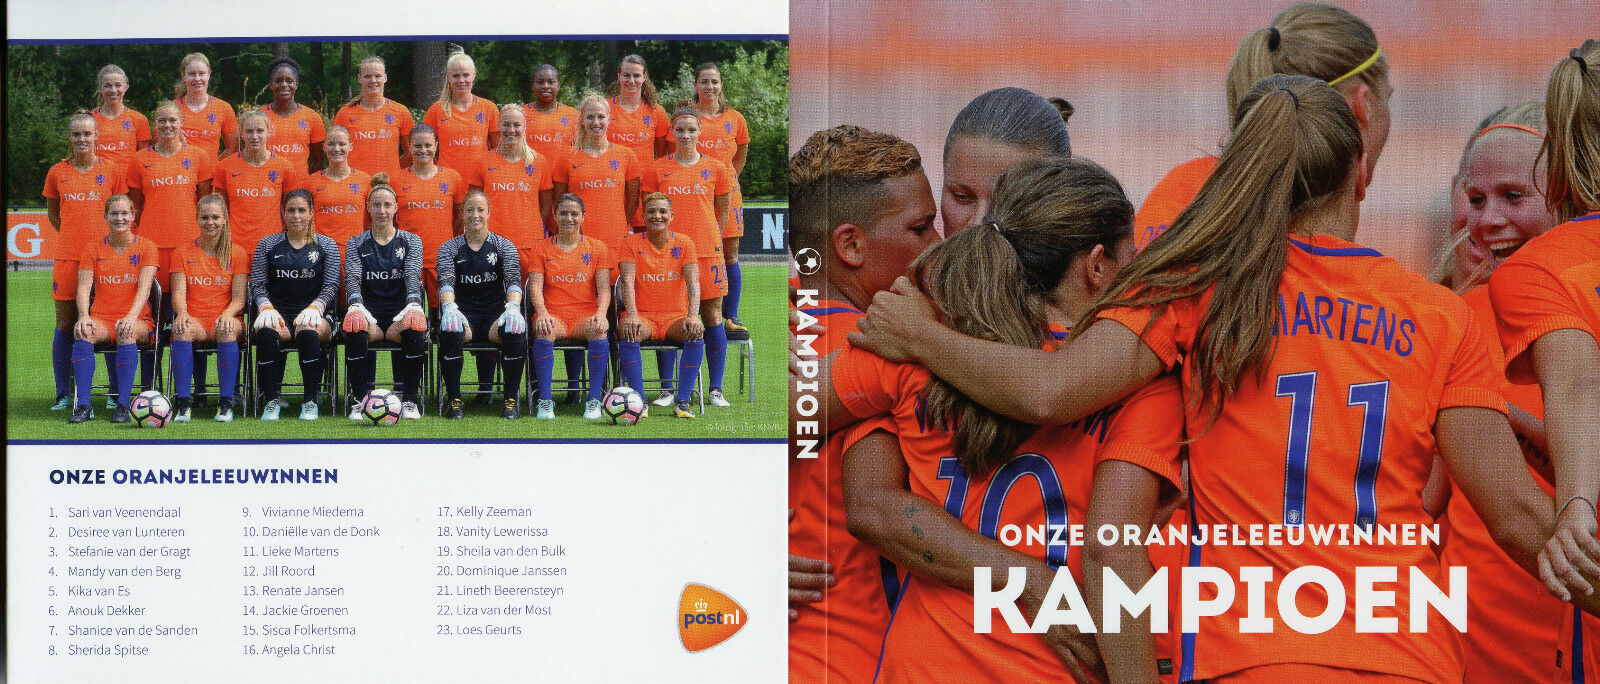 Netherlands 2017 MNH Women's Football European Champions Soccer 1v Silver Stamp